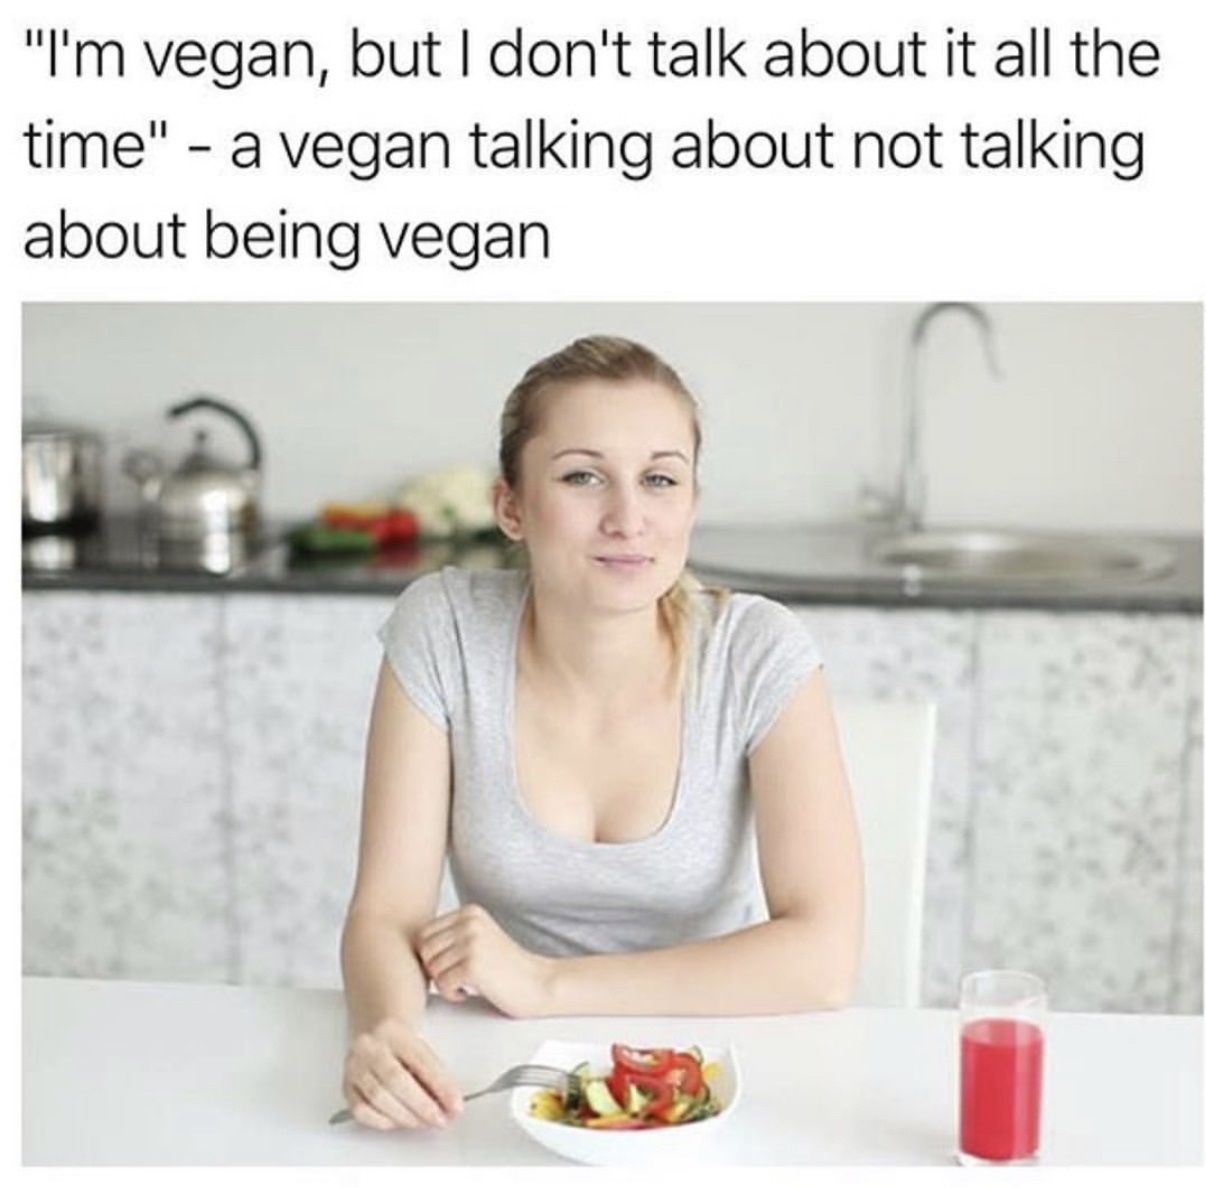 Veganism - "I'm vegan, but I don't talk about it all the time" a vegan talking about not talking about being vegan